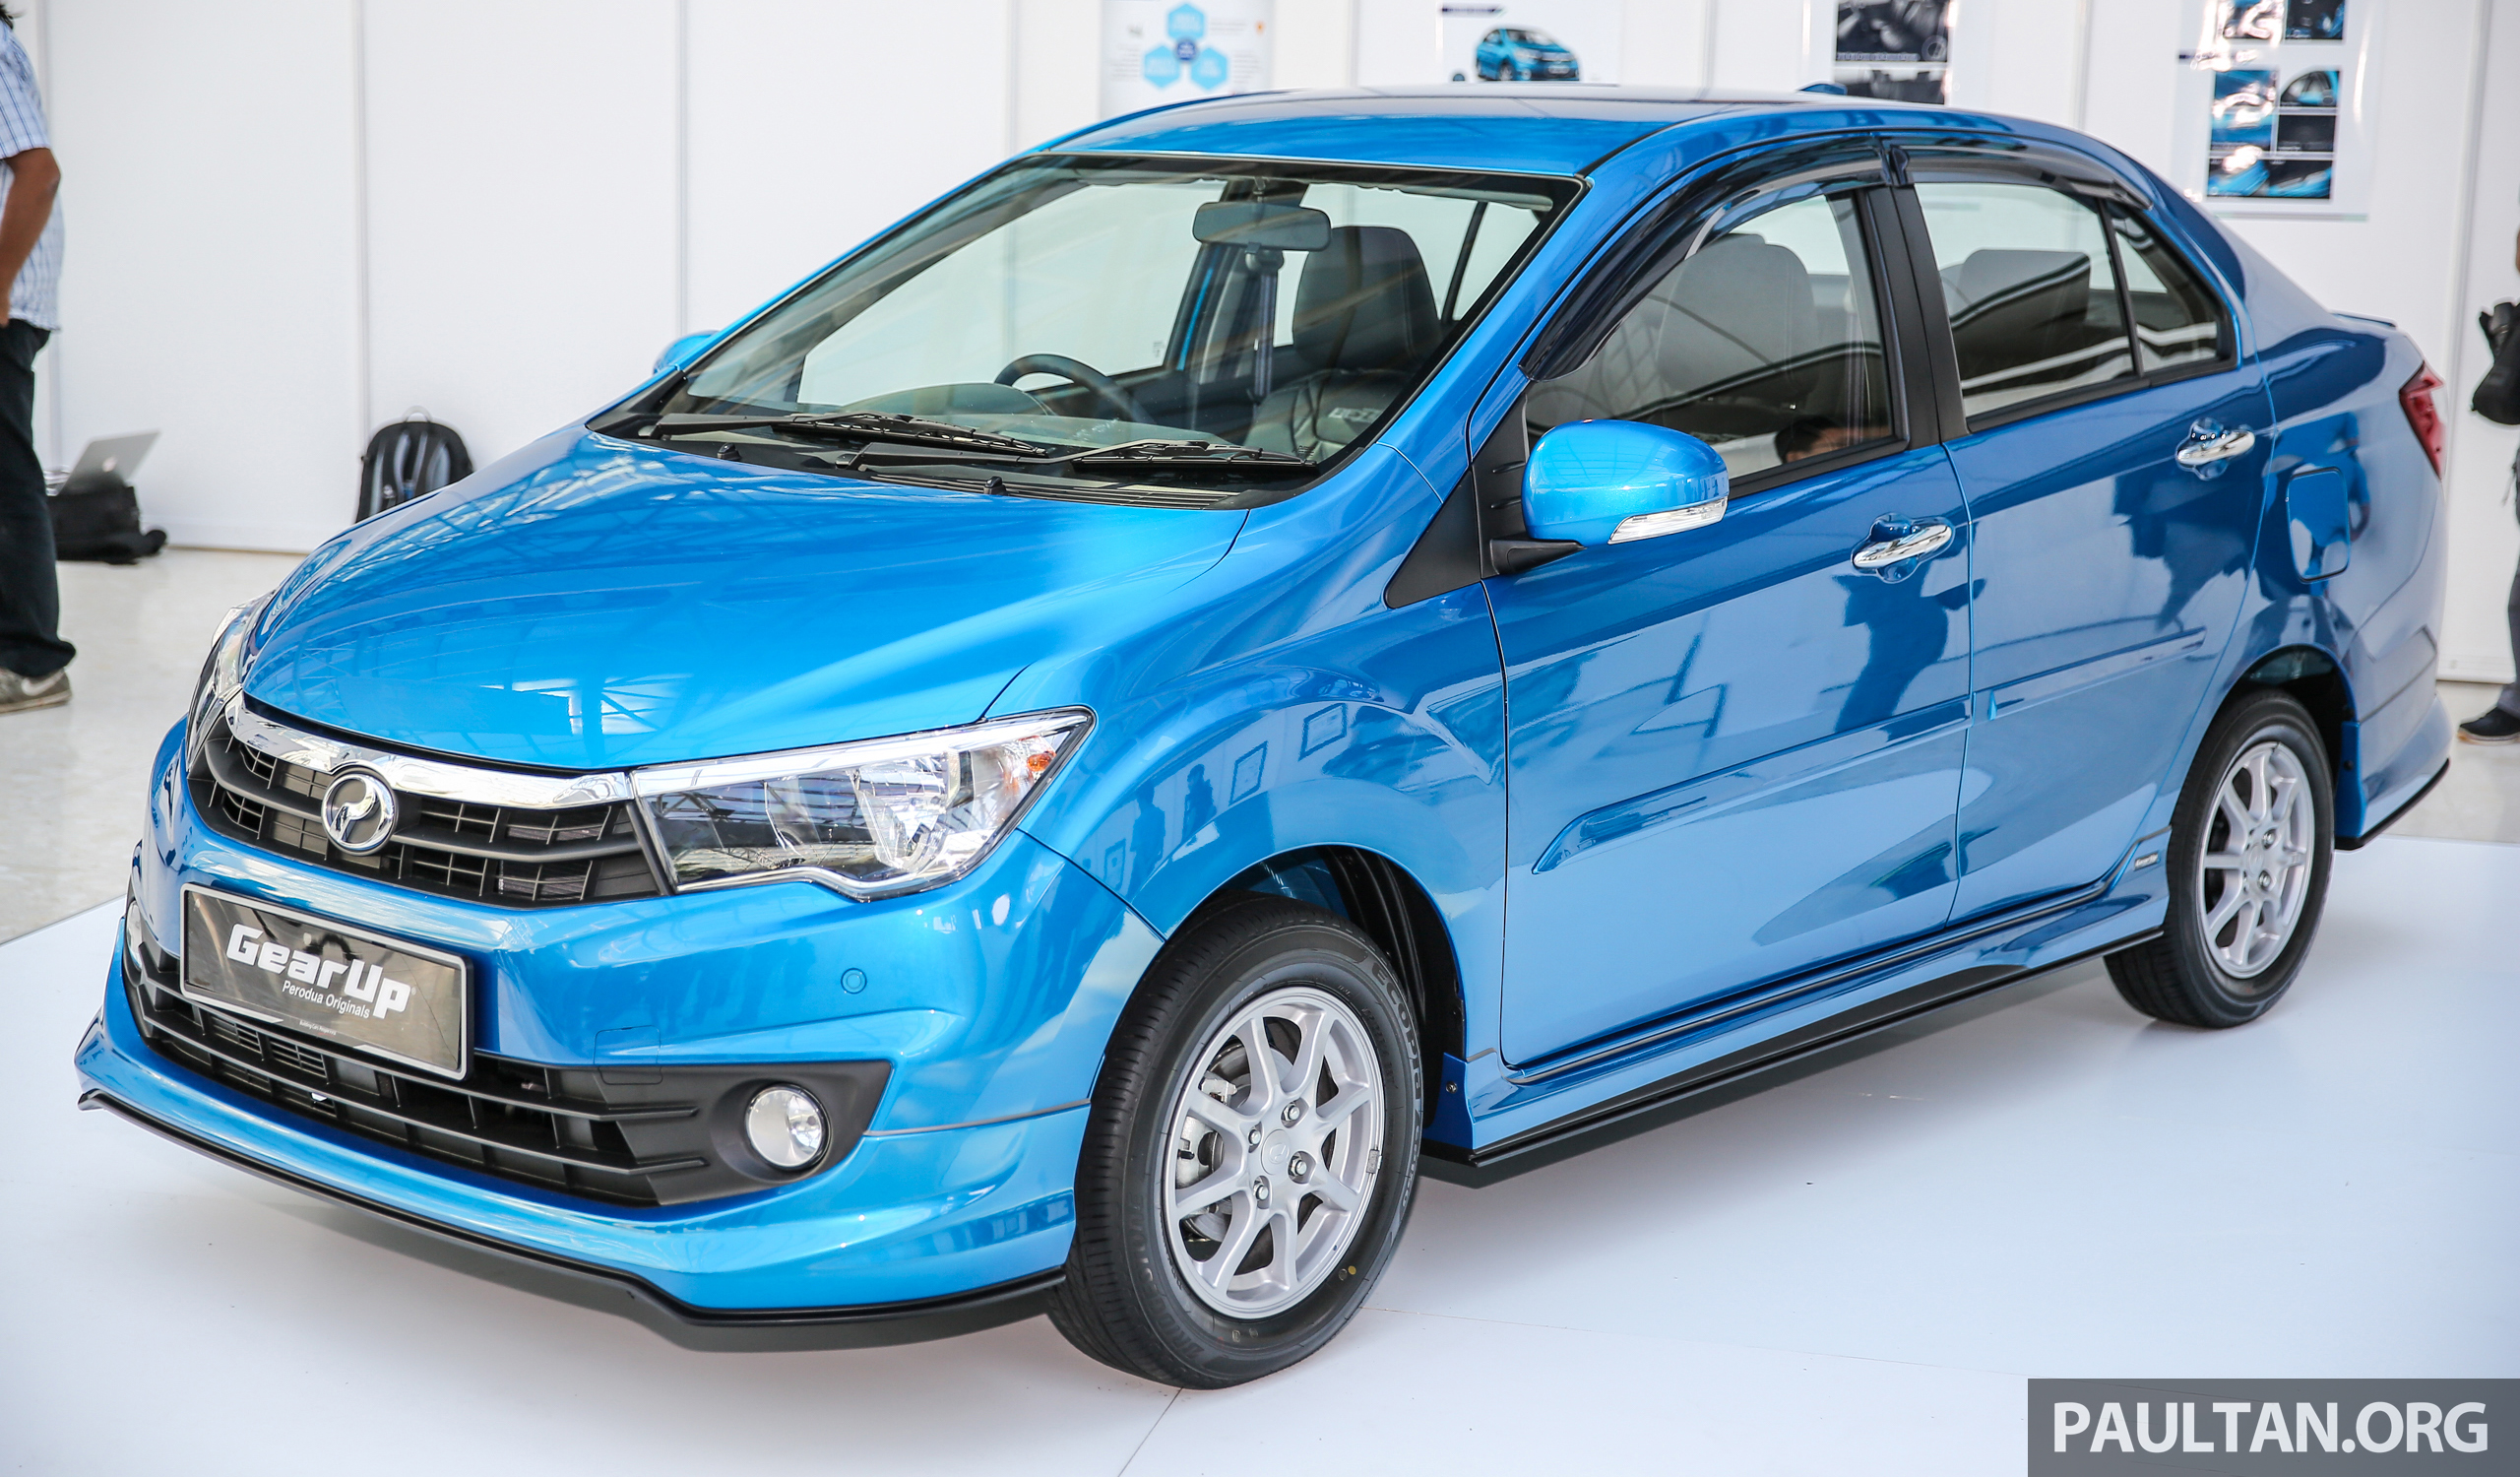 Perodua Bezza tops Trending Car Models list in Google's ...